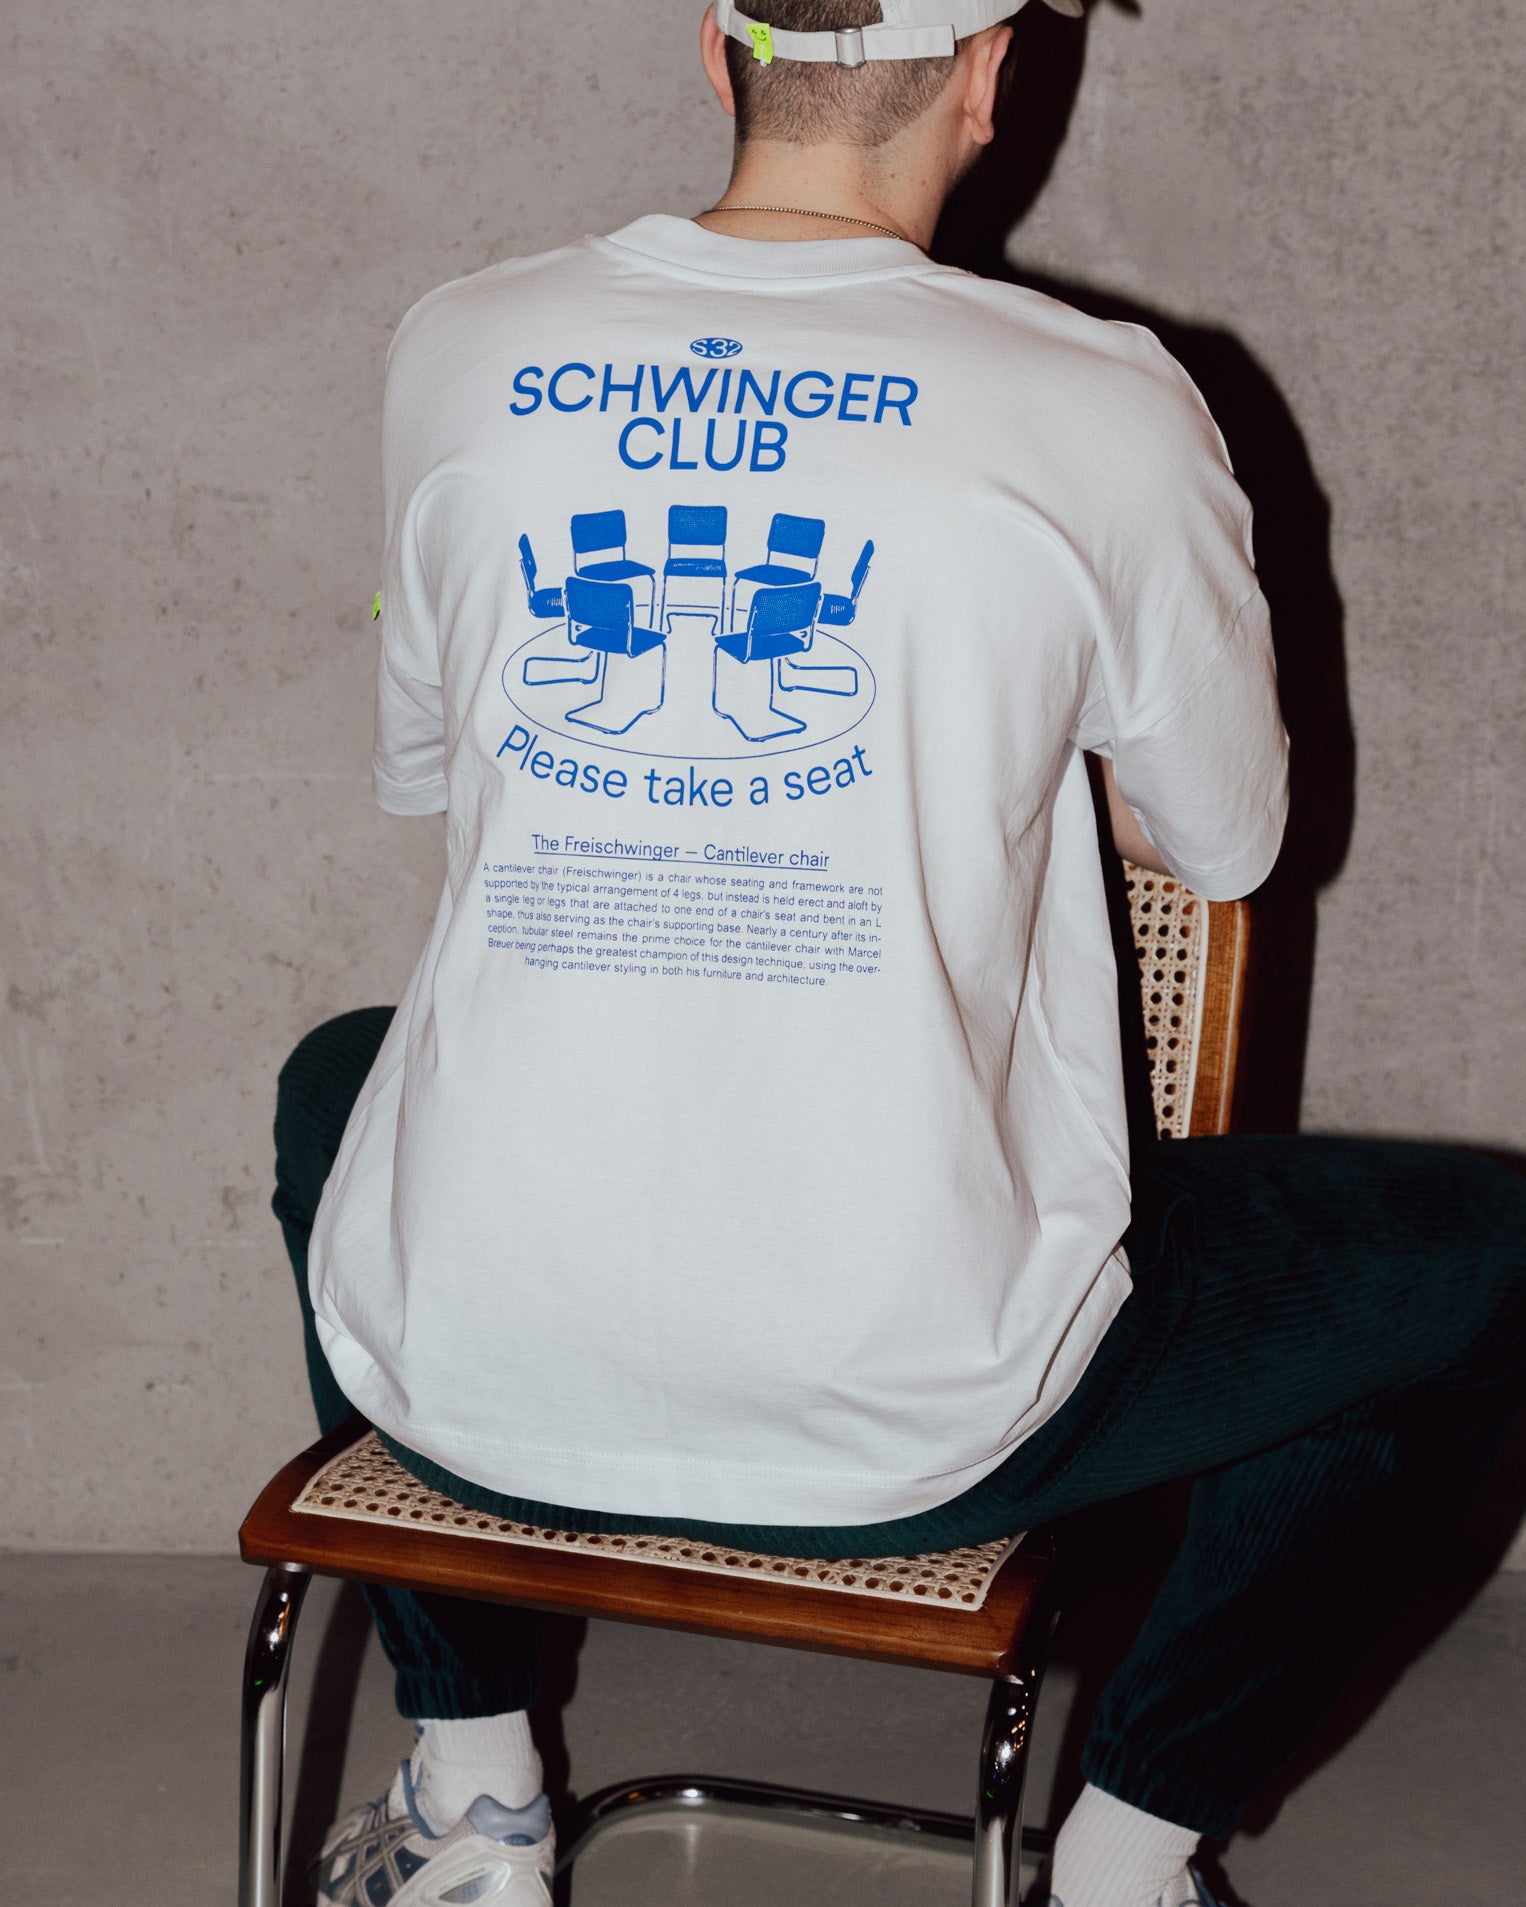 SCHWINGER CLUB Shirt by Moritz Moysig